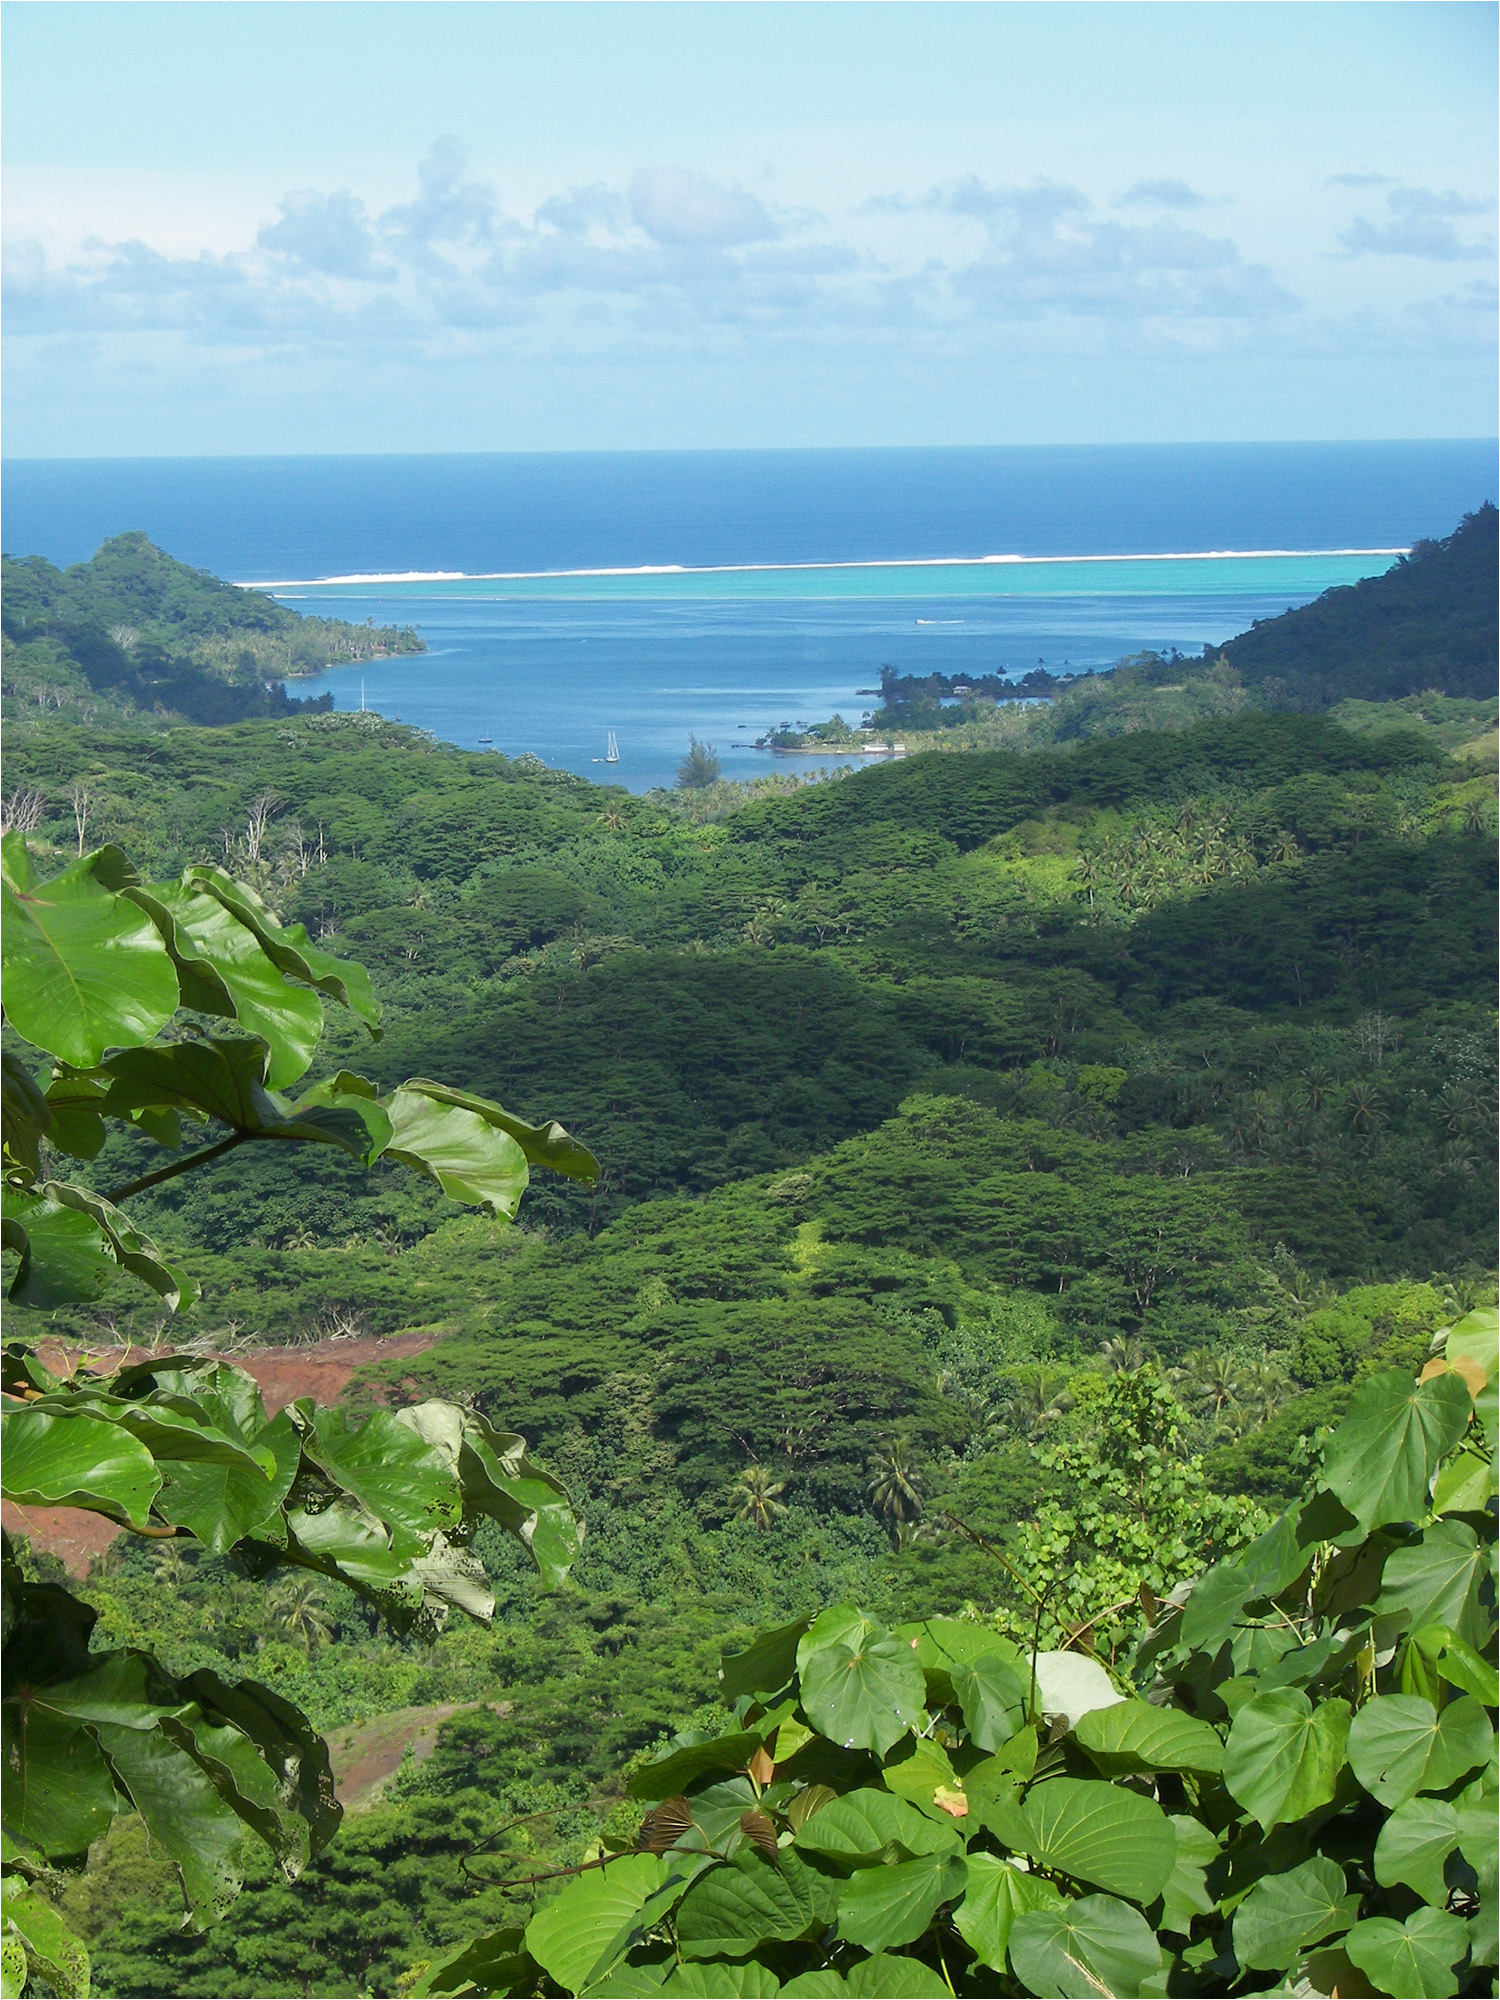 More scenic views from Tahha island tour